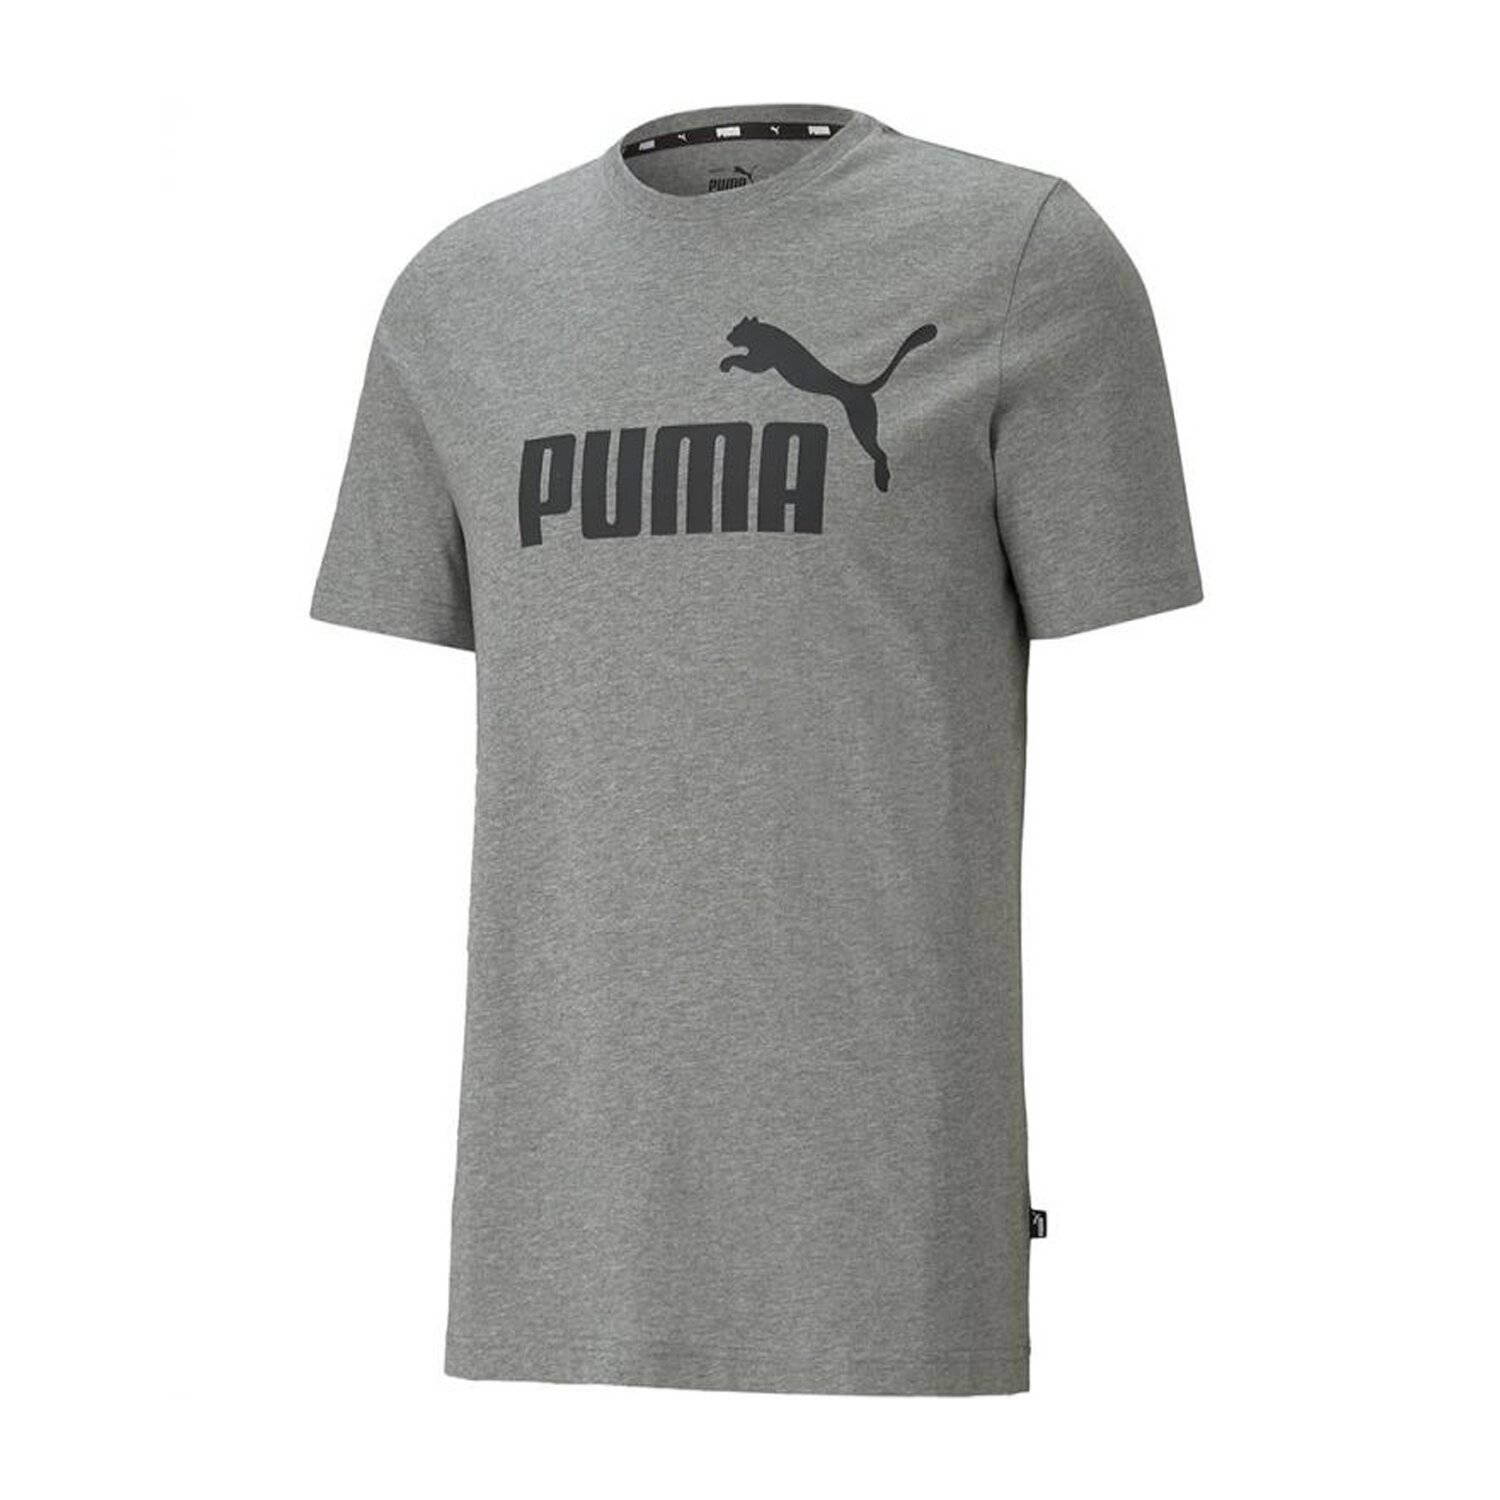 Camiseta Puma Essentials Hombre Blanco